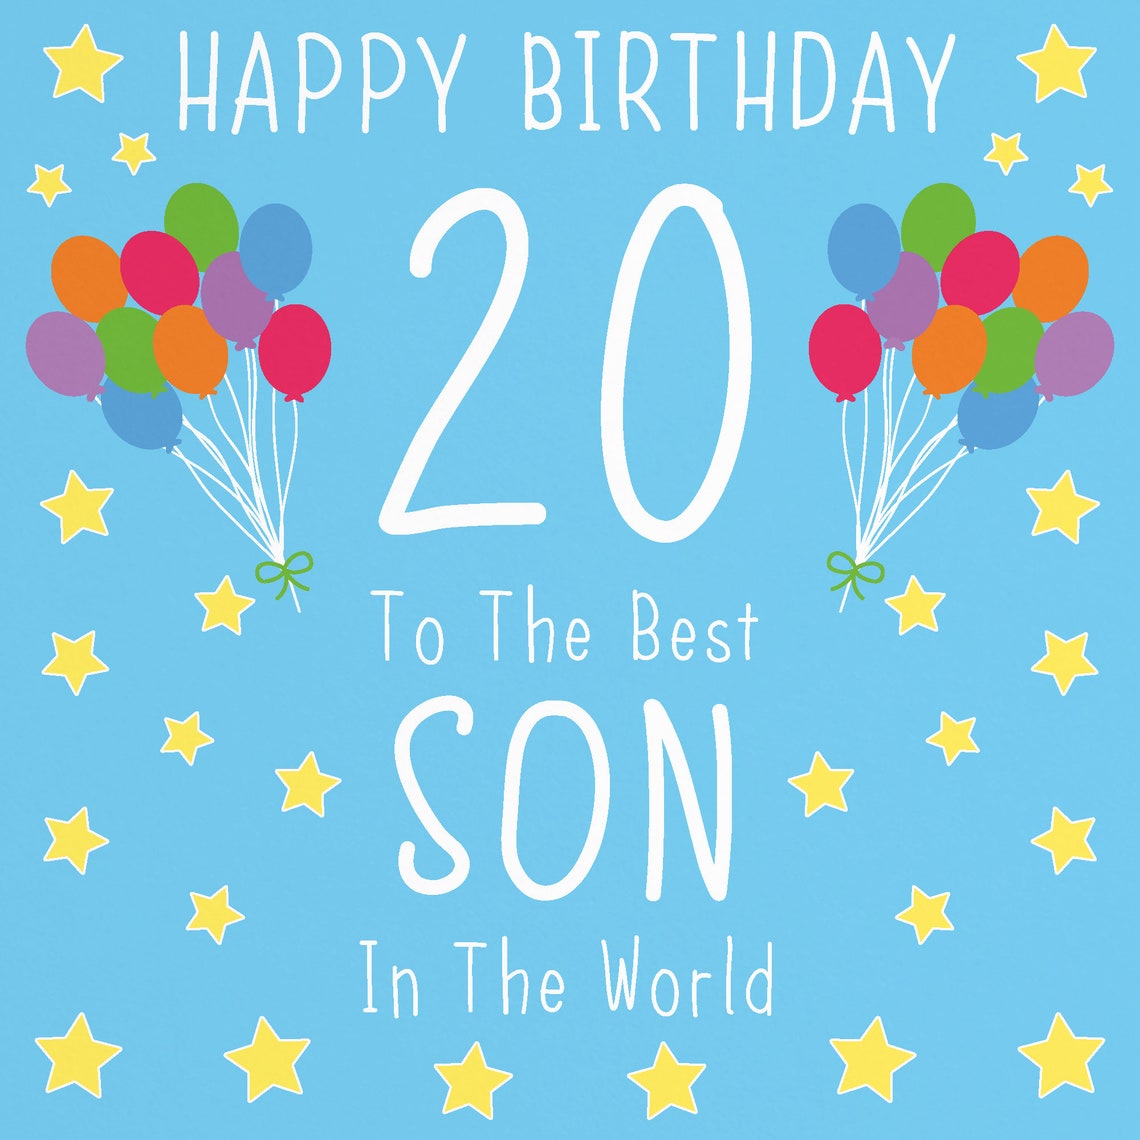 Son 20th Birthday Card Happy Birthday 20 To The Best Son Etsy